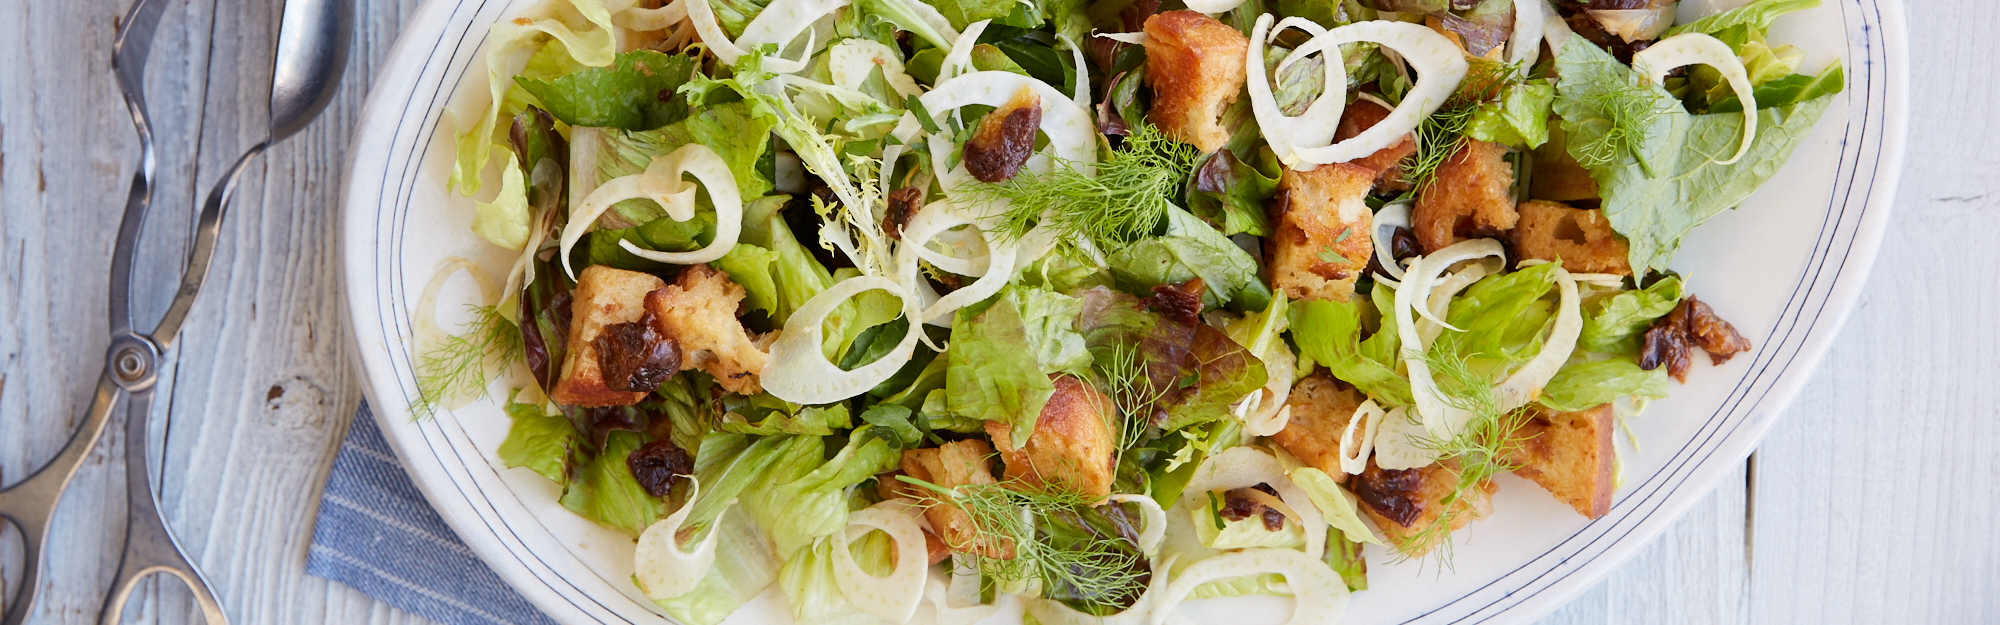 Make a flavorful warm chicken salad with Sunsweet prunes